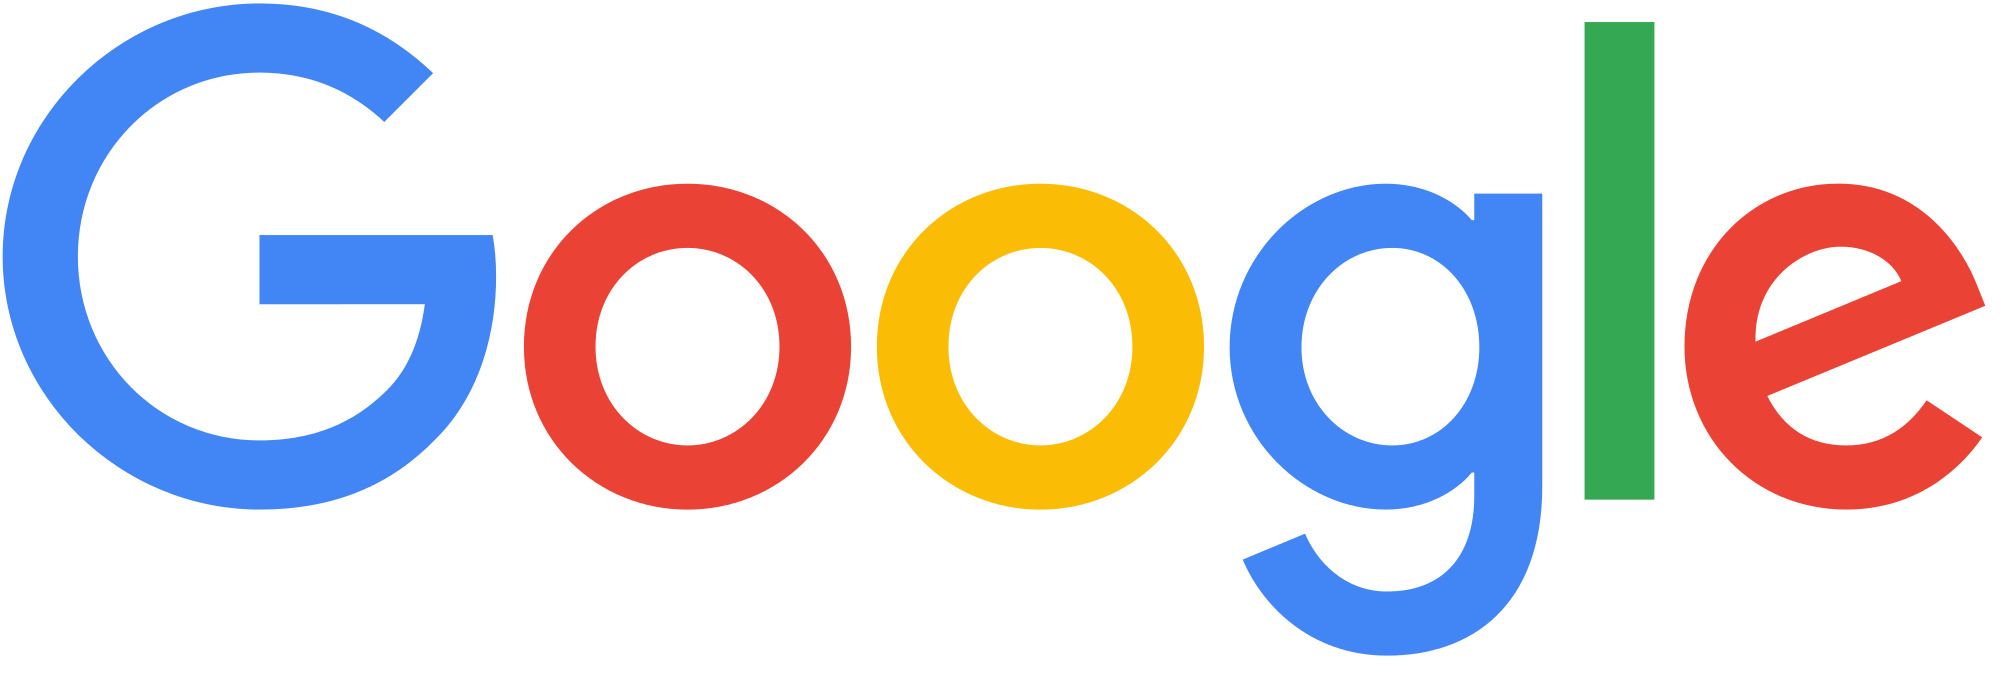 Orange bloque Google pour apologie du terrorisme